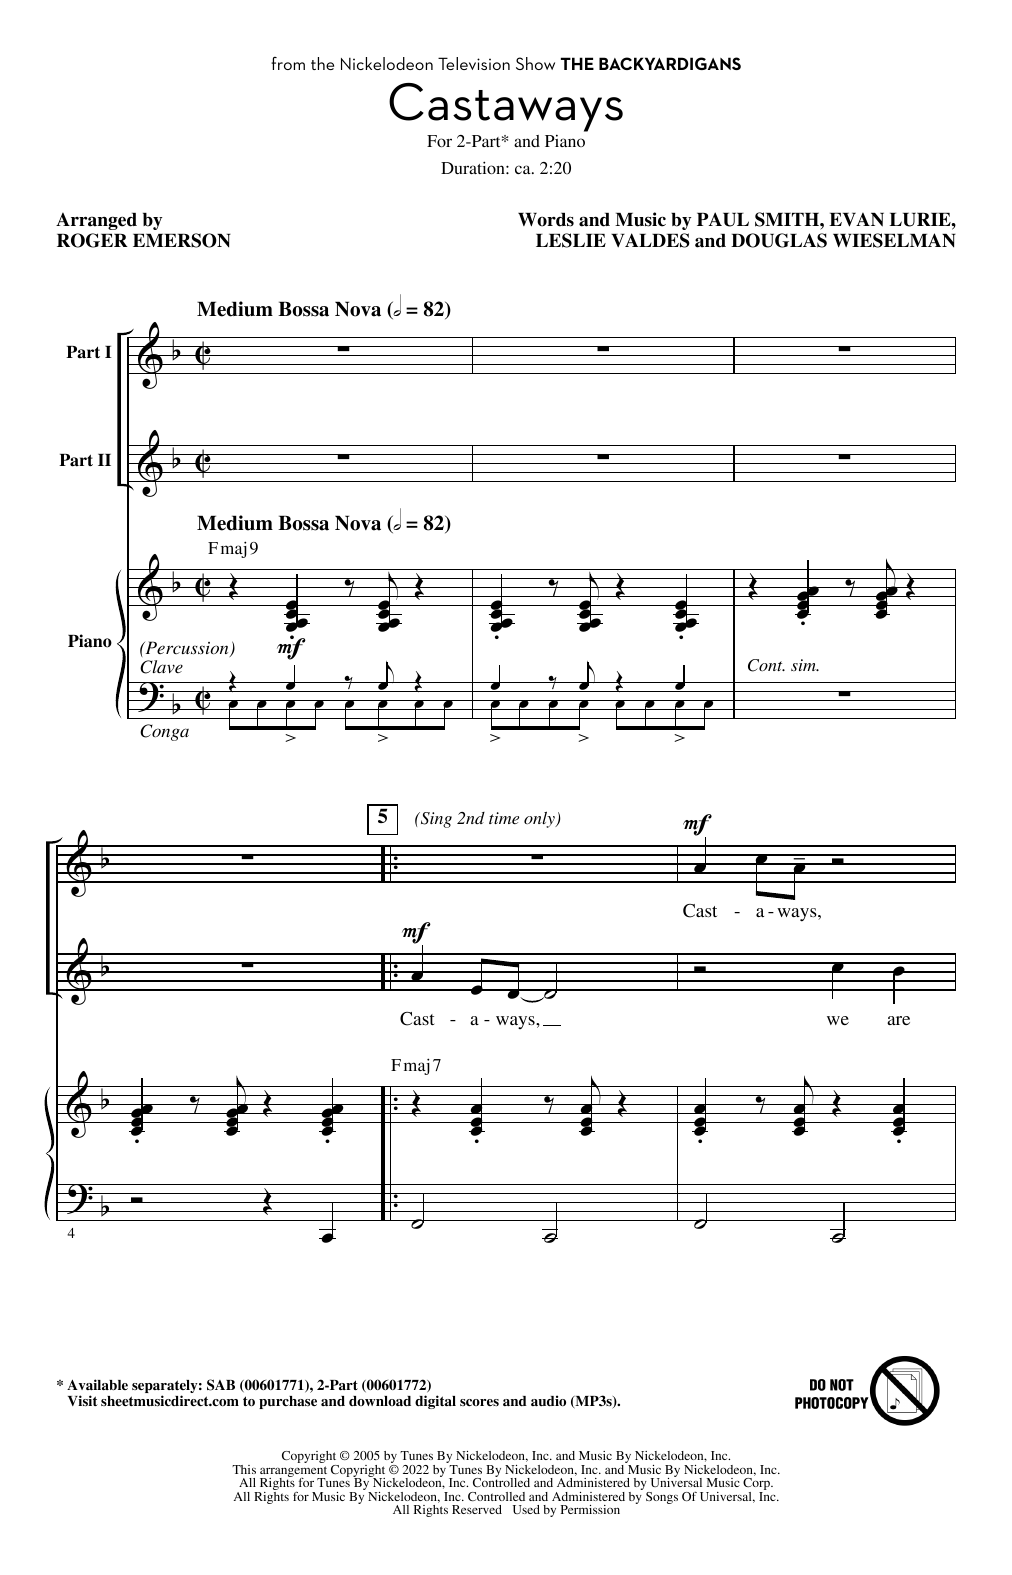 The Backyardigans Castaways (arr. Roger Emerson) Sheet Music Notes & Chords for 2-Part Choir - Download or Print PDF